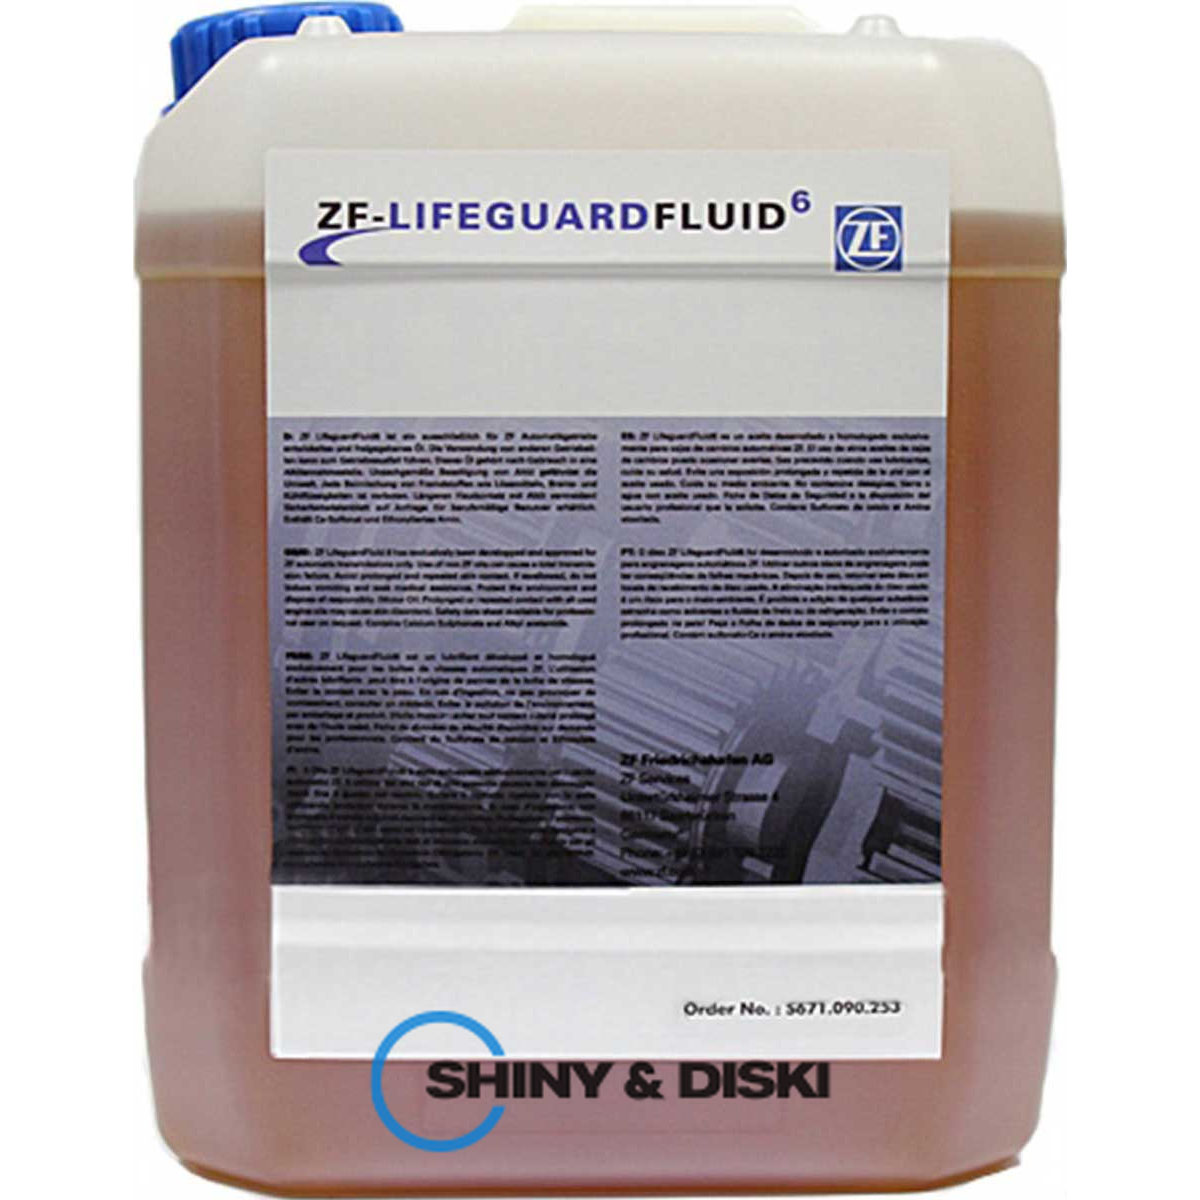 zf lifeguardfluid 6